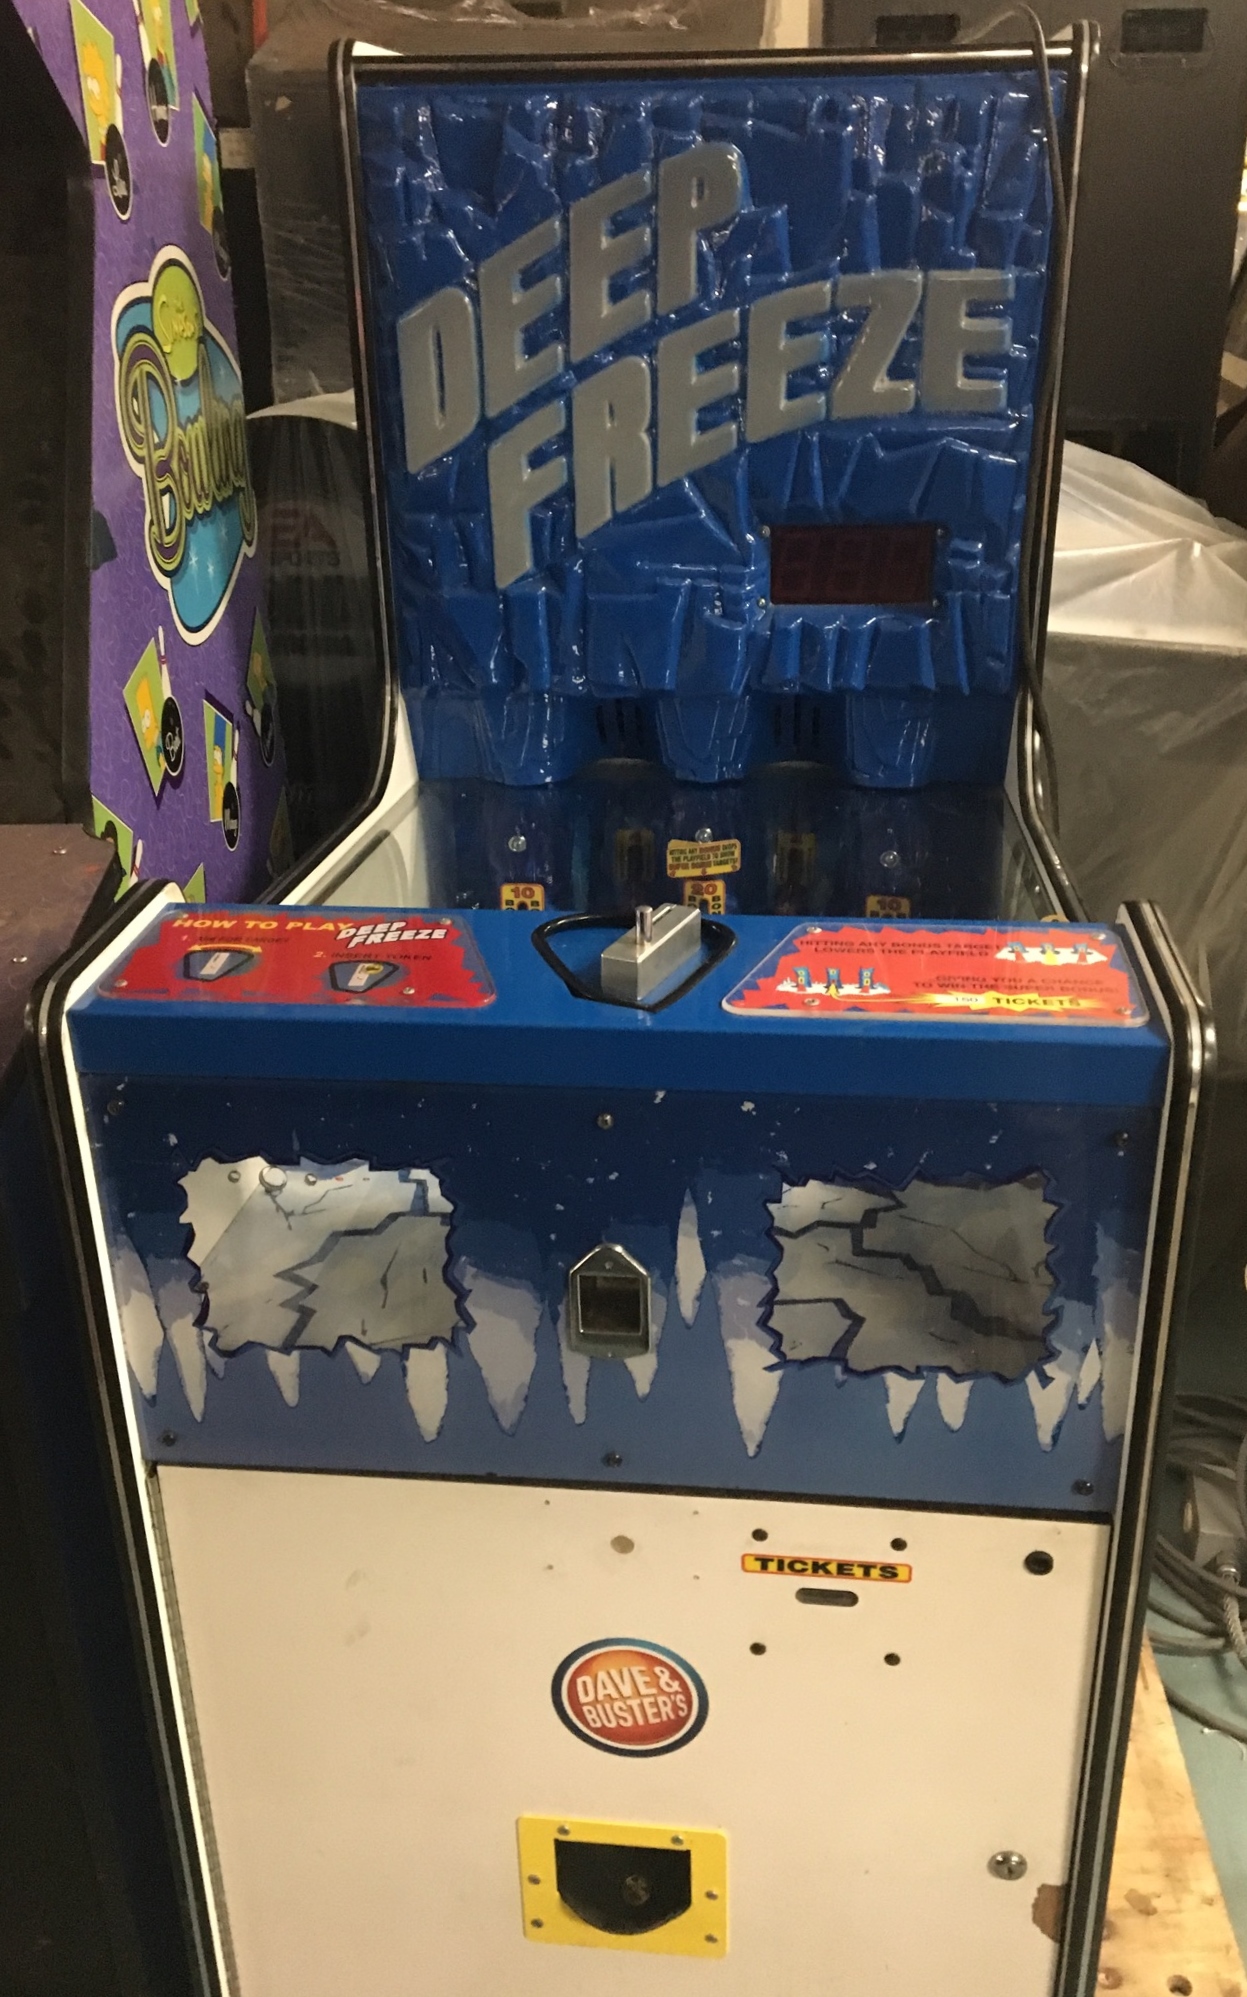 DEEP FREEZE Ticket Redemption Arcade Machine Game for sale by BAYTEK - EXCELLENT CONDITION ...